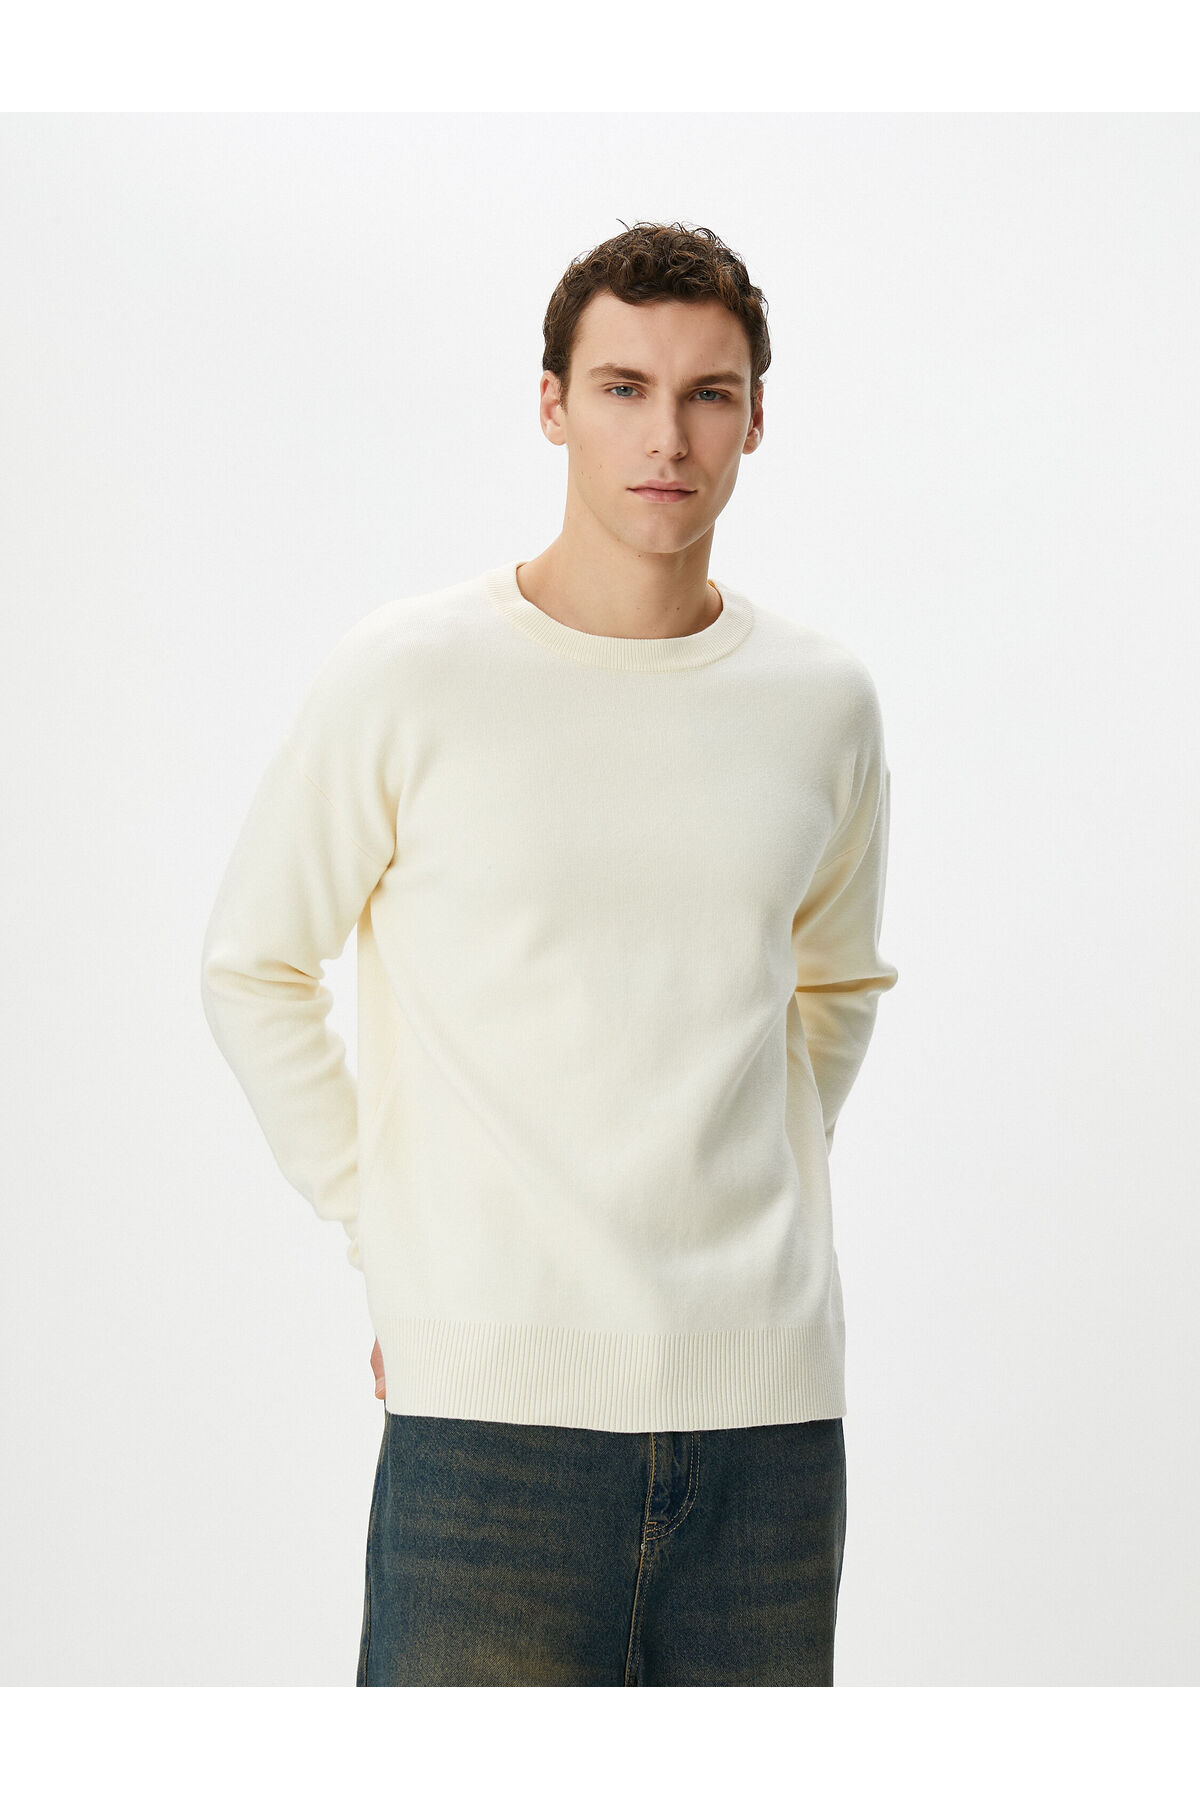 Koton Basic Knitwear Sweater Crew Neck Soft Textured Long Sleeve